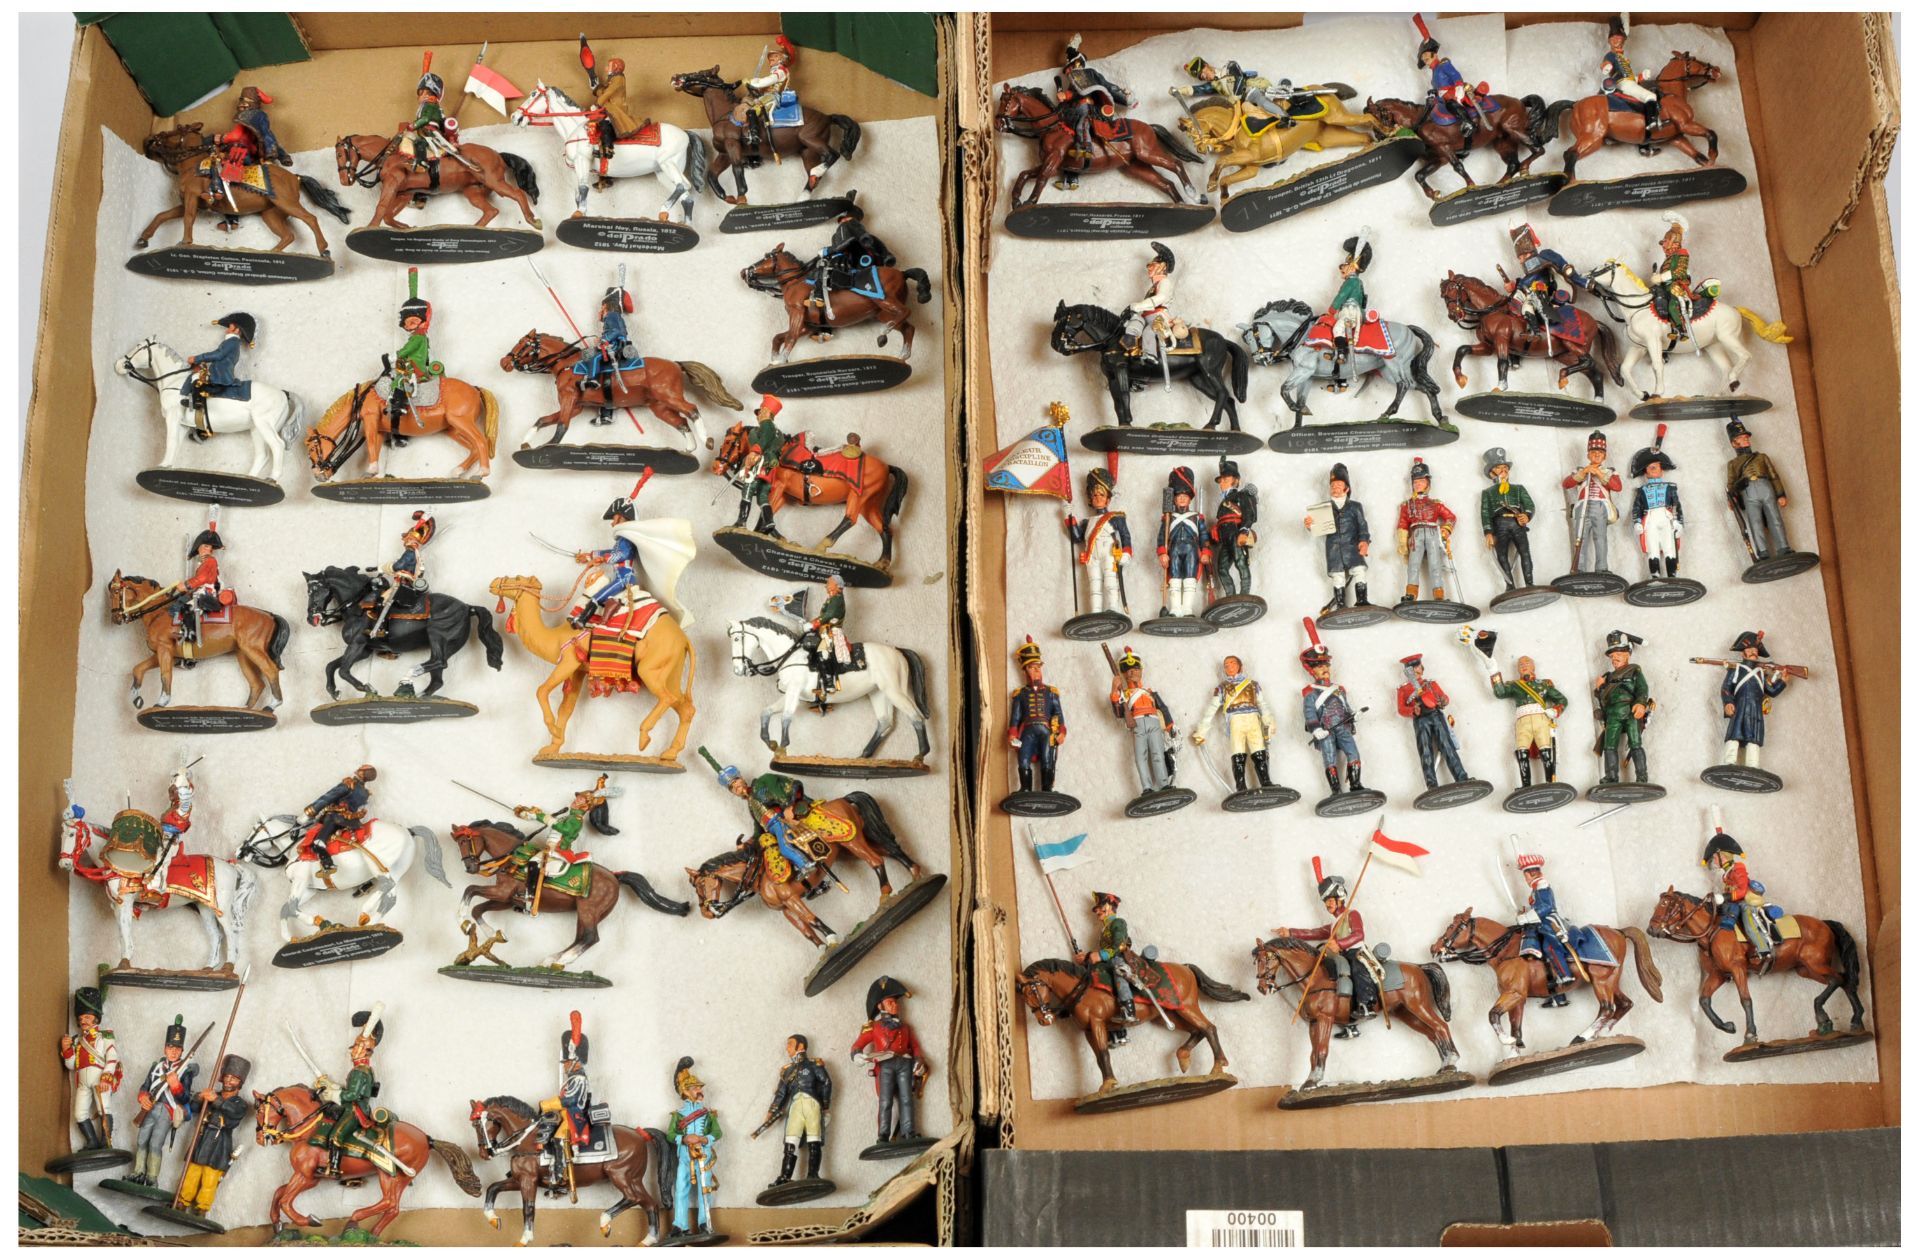 Del Prado - Napoleon at War Series - Quantity of Loose Diecast Figures